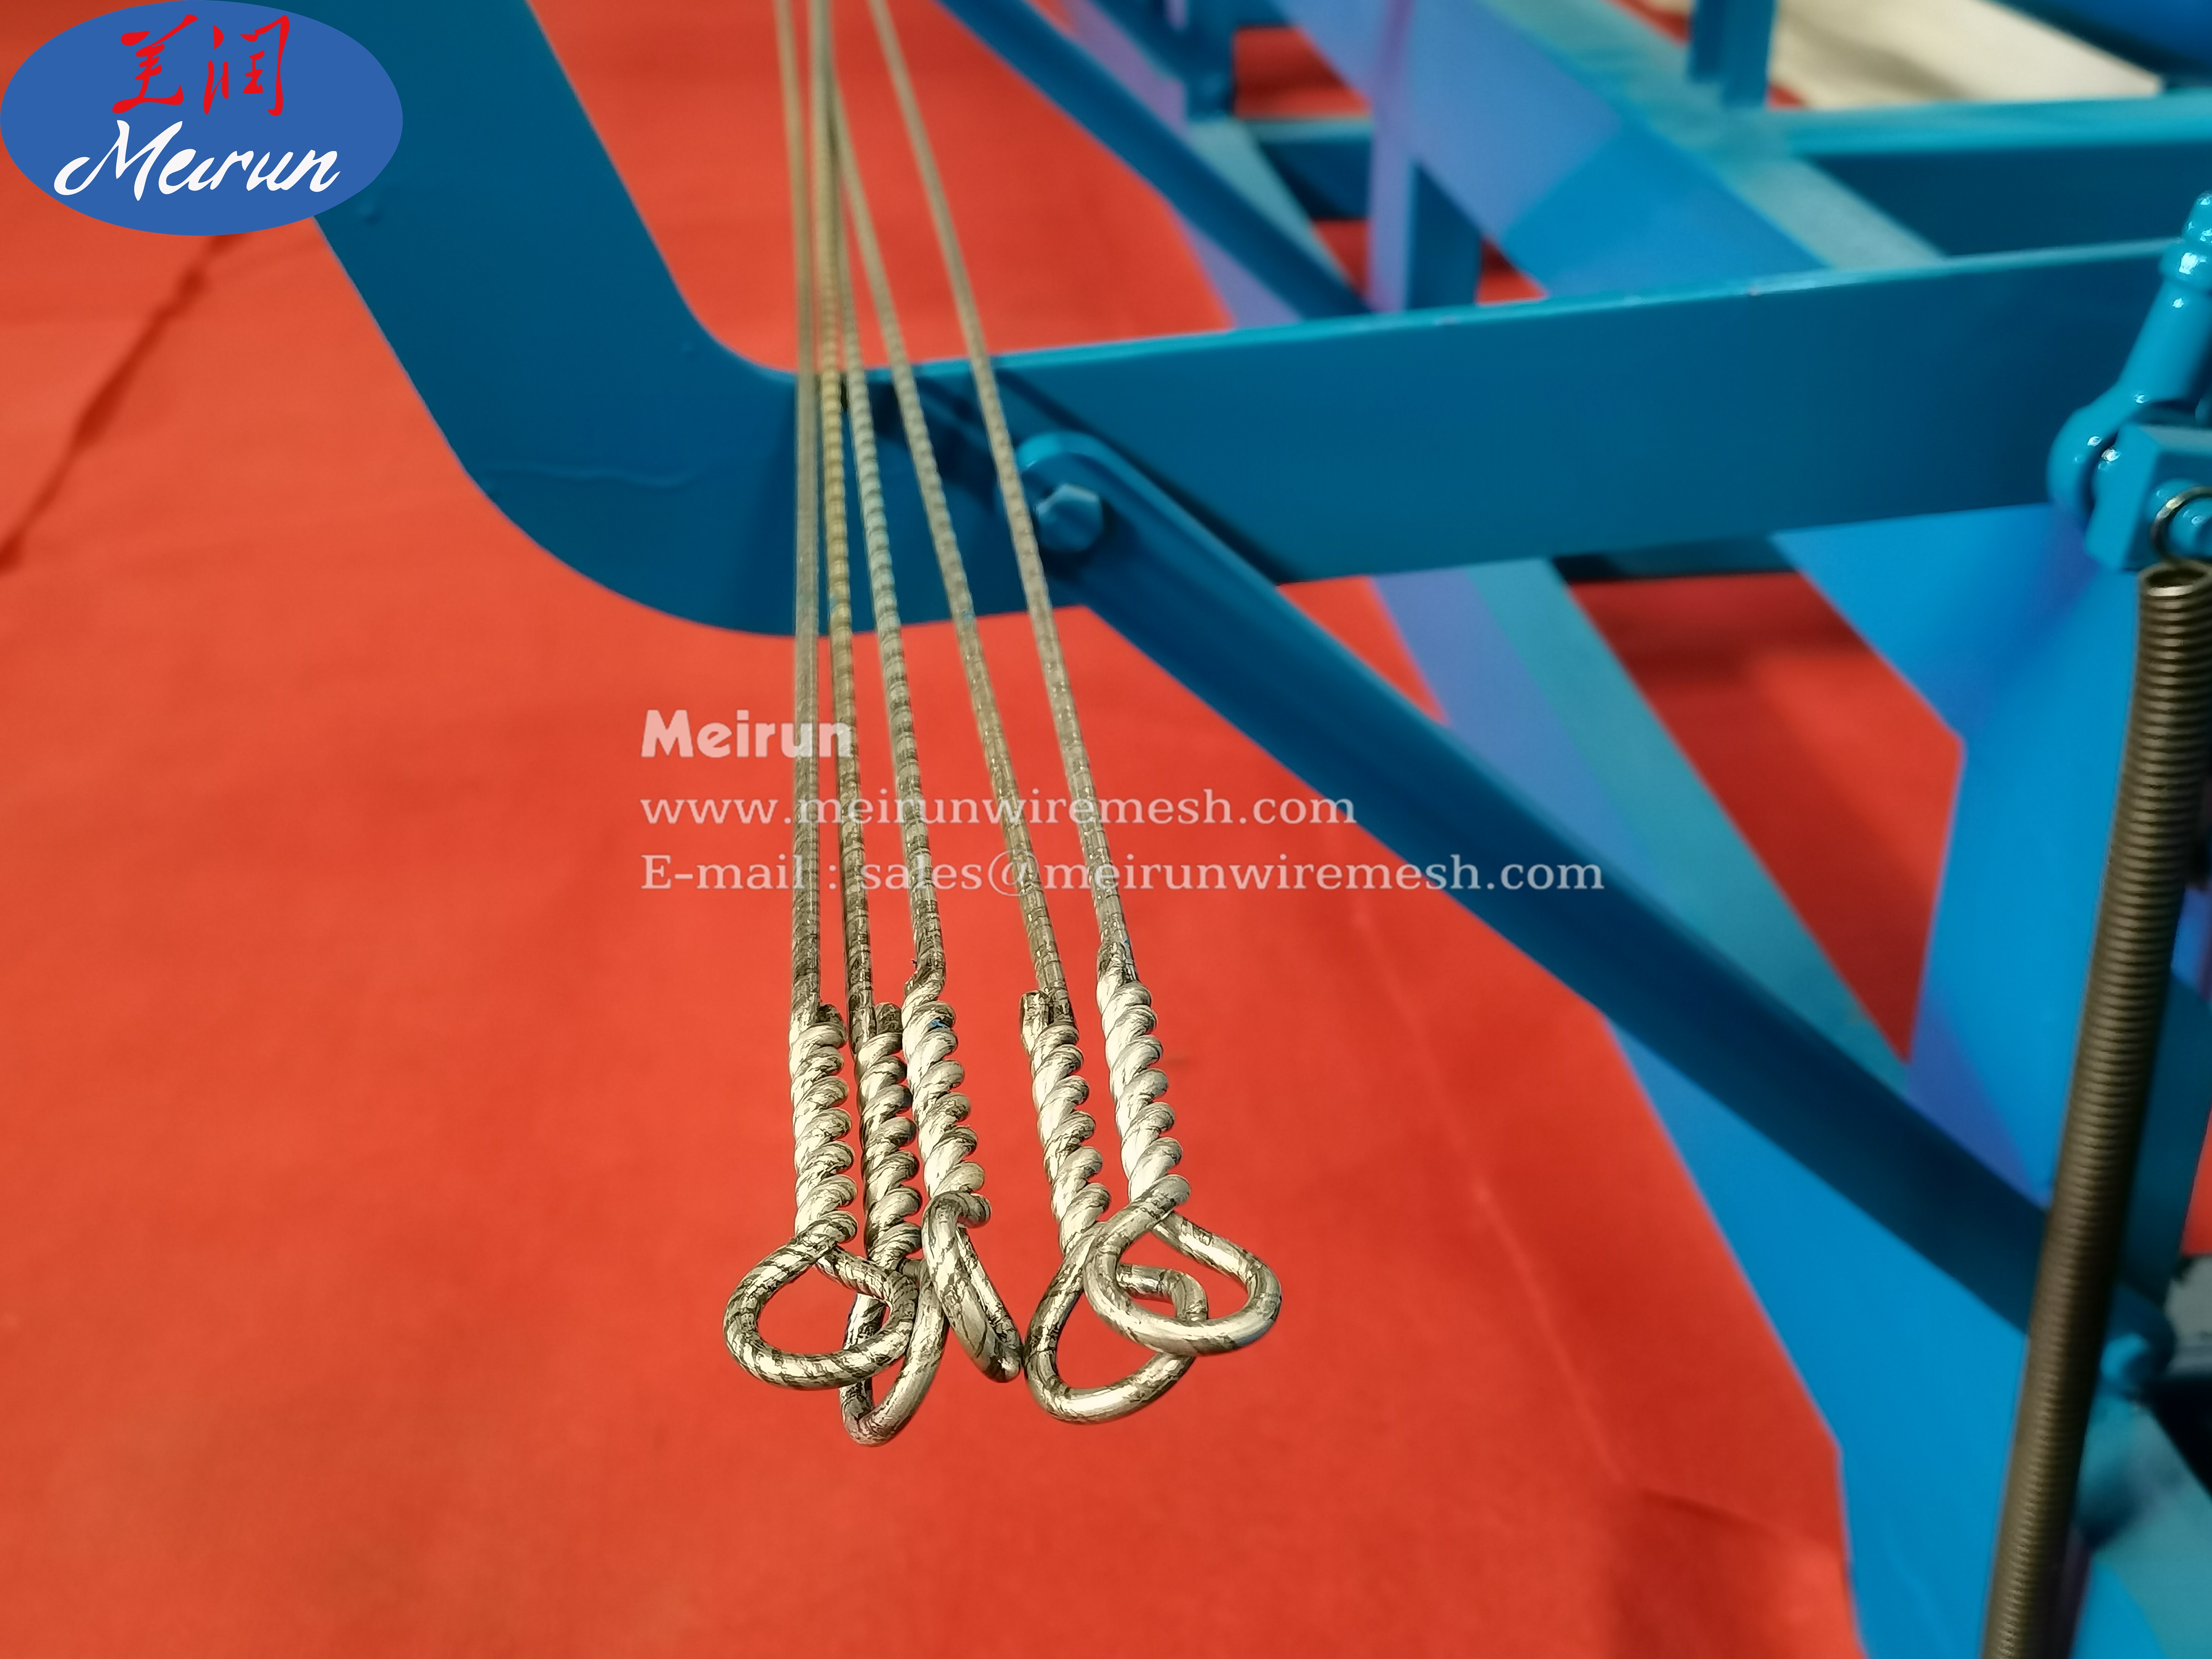 Single Binding Wire Machine Made in China Market